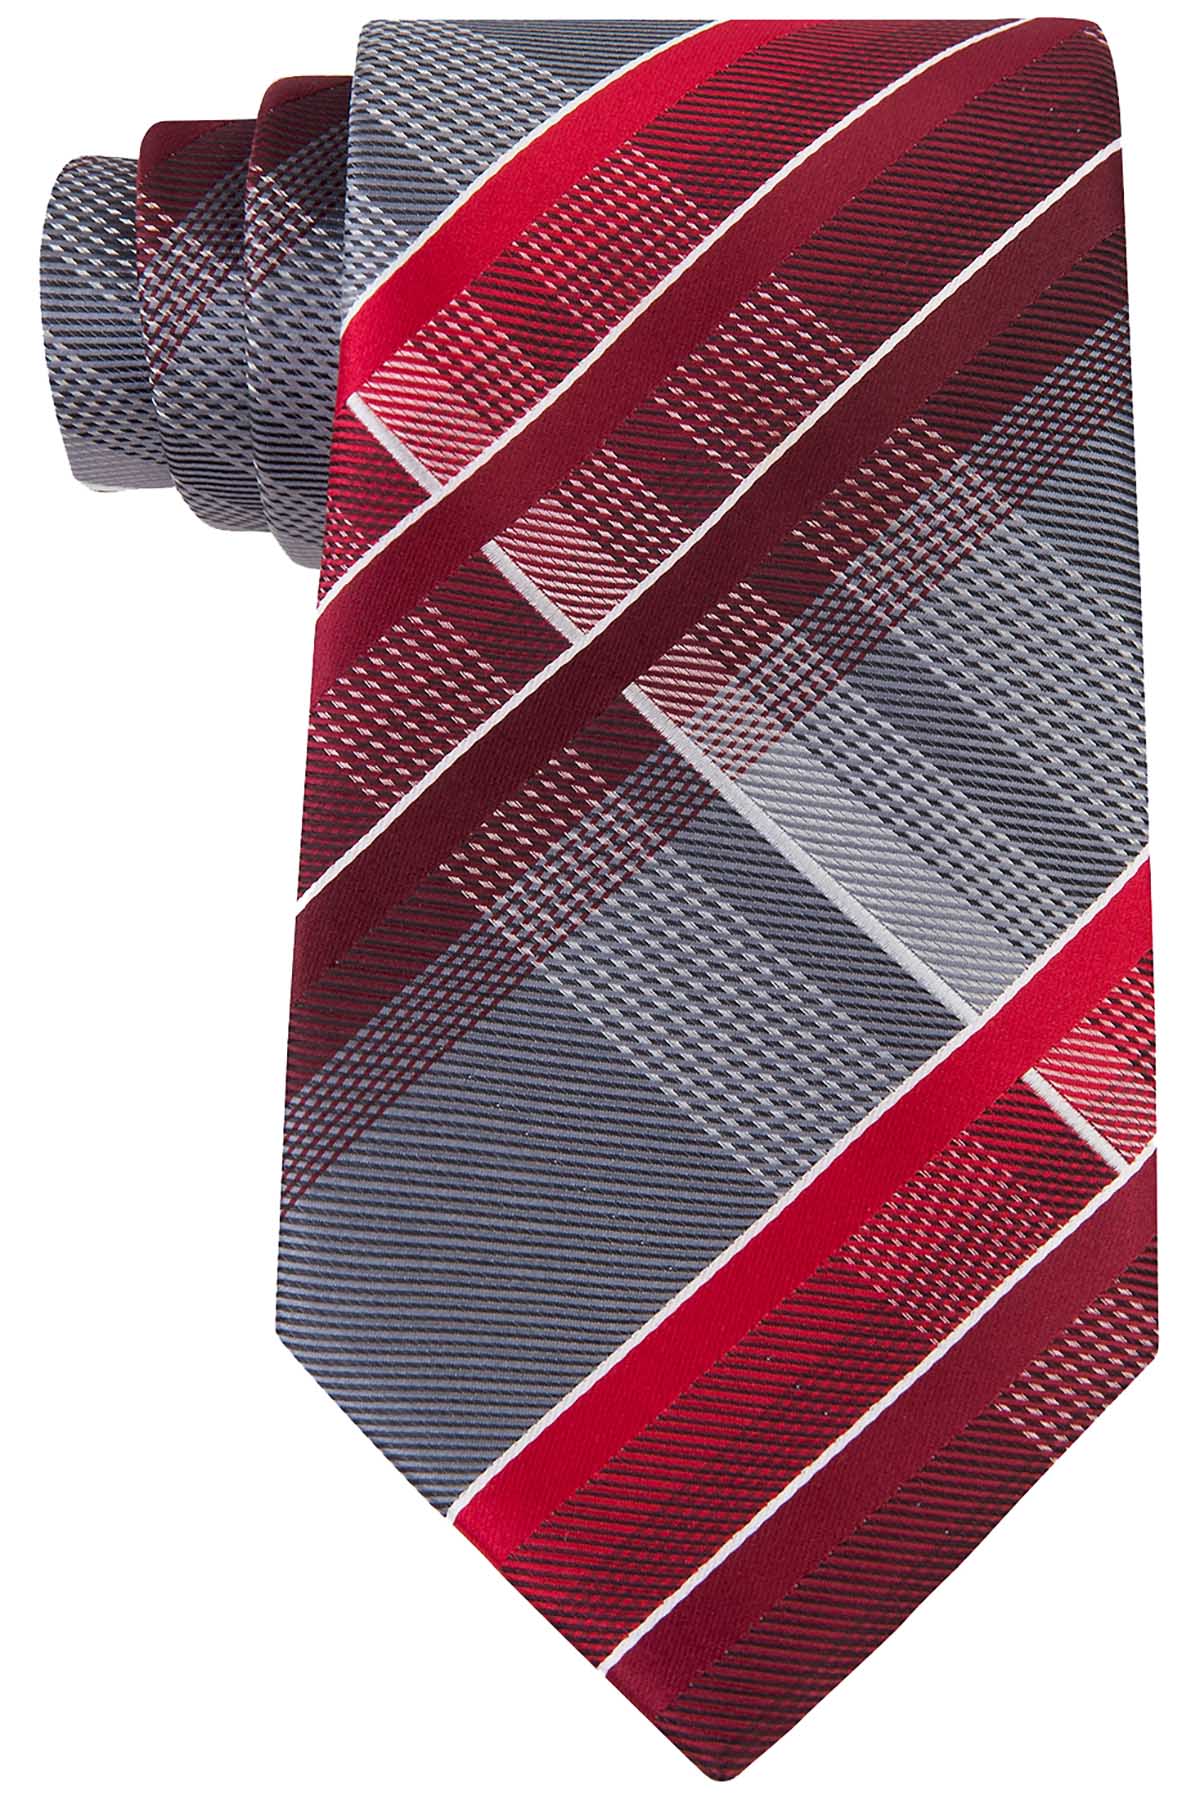 Geoffrey Beene Red/Grey Fearless Plaid Tie